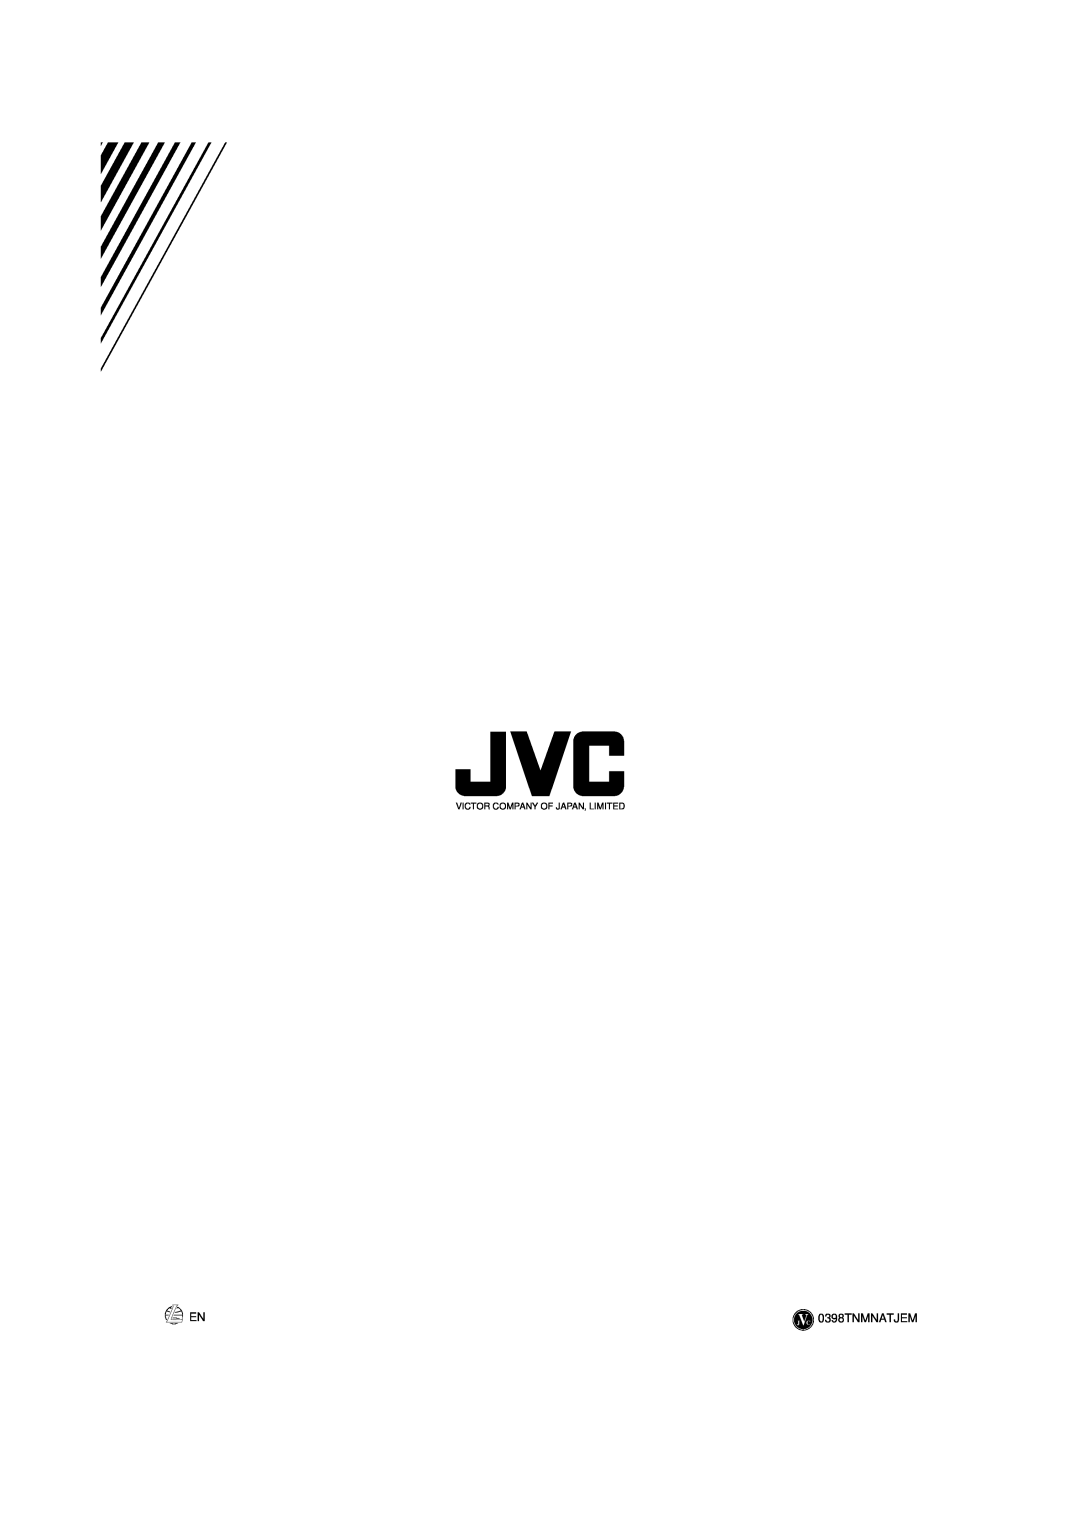 JVC MX-D402T manual 0398TNMNATJEM, Victor Company Of Japan, Limited 